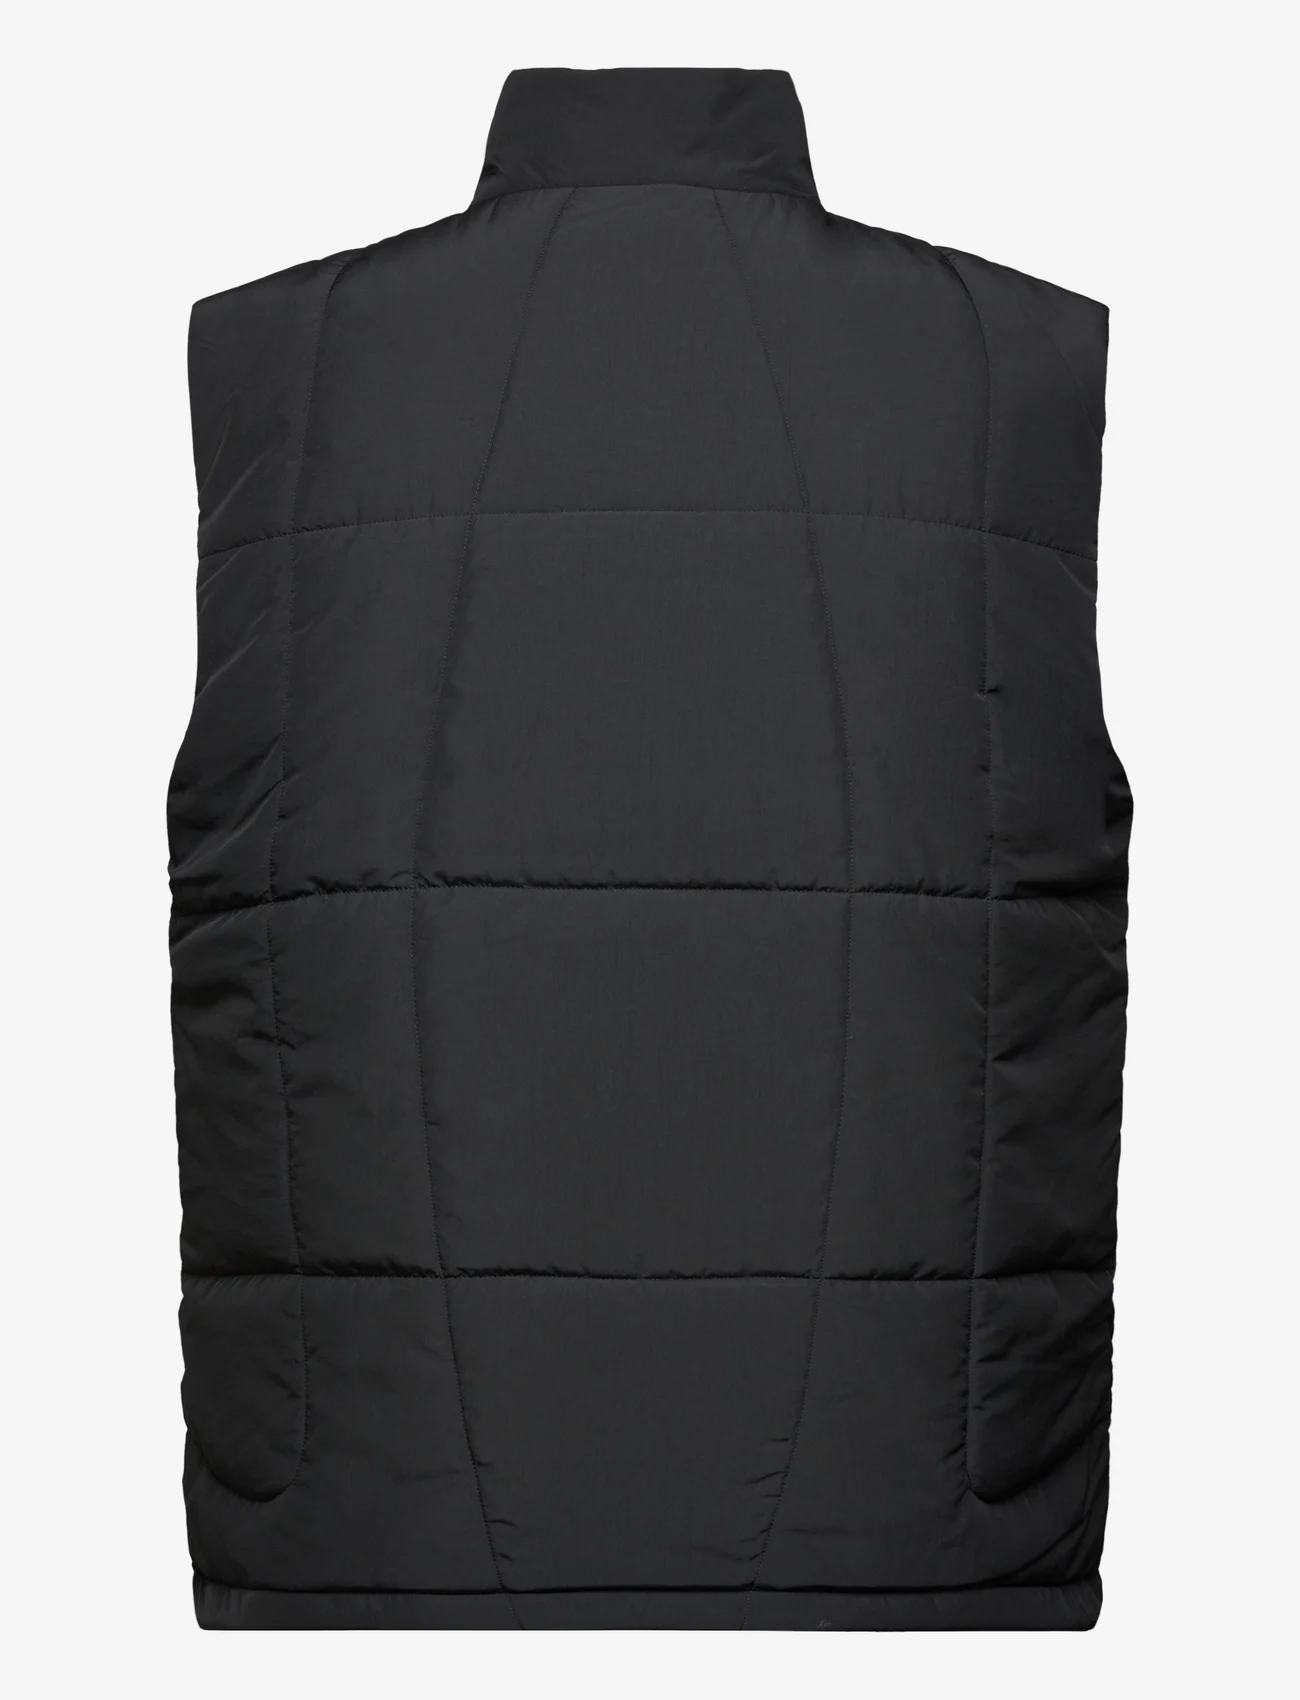 adidas Originals - ADV PADDED VEST - sports jackets - black - 1